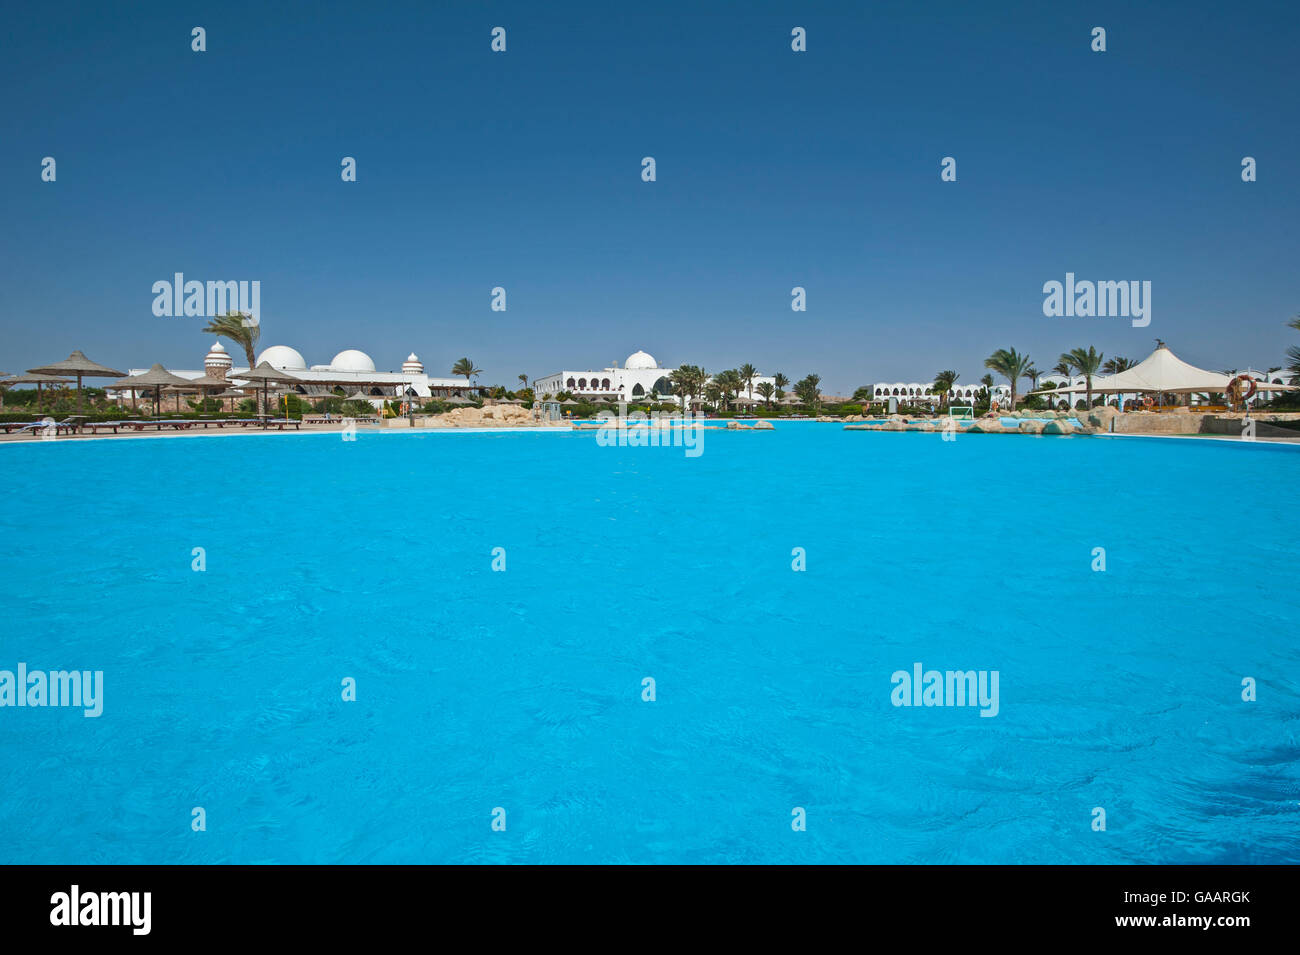 Großer Swimmingpool in einem luxuriösen Hotel Tropical Resort Stockfoto